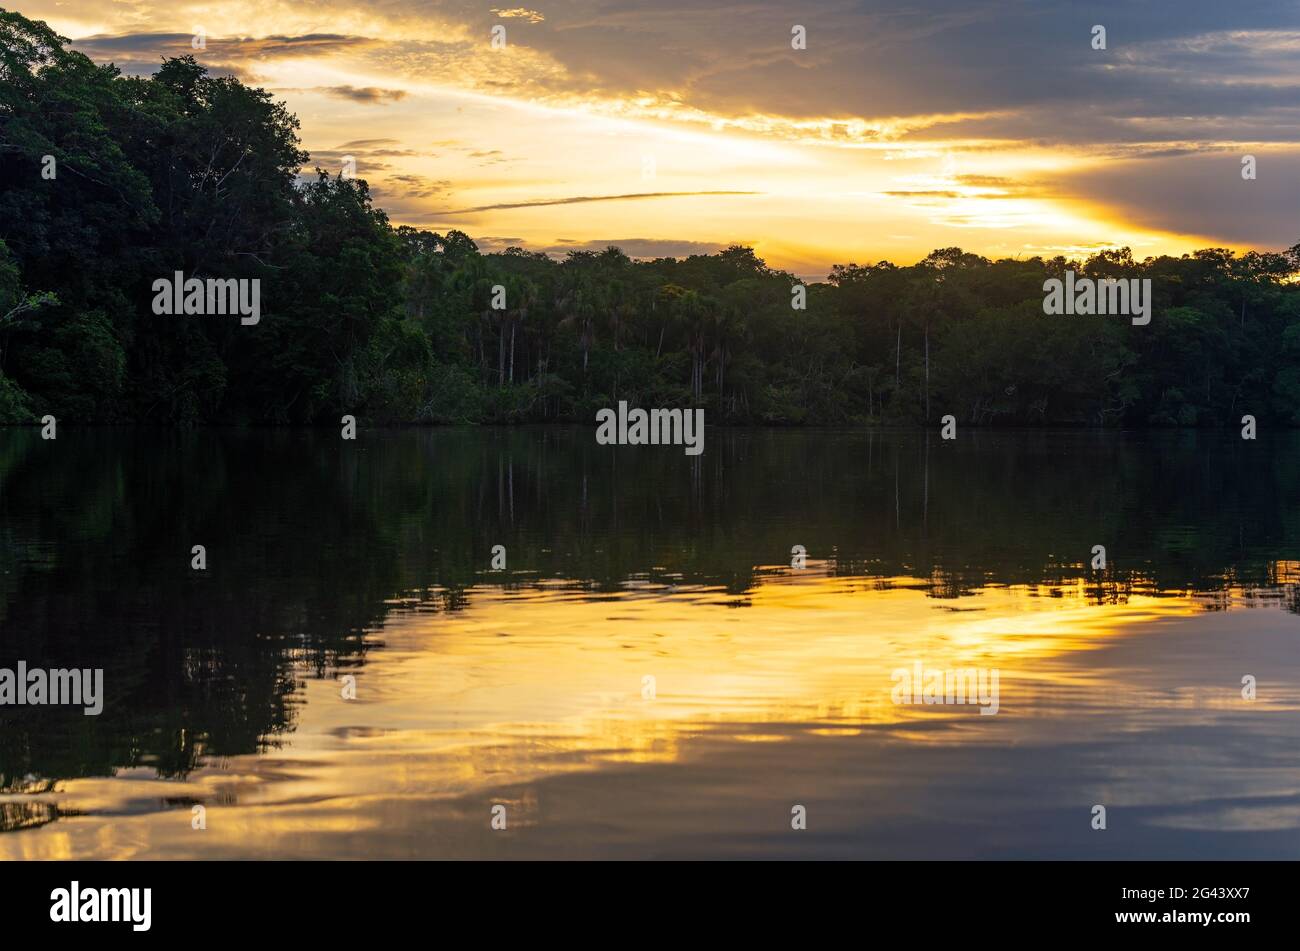 Amazon river rainforest sunset, Yasuni national park, Ecuador. Stock Photo